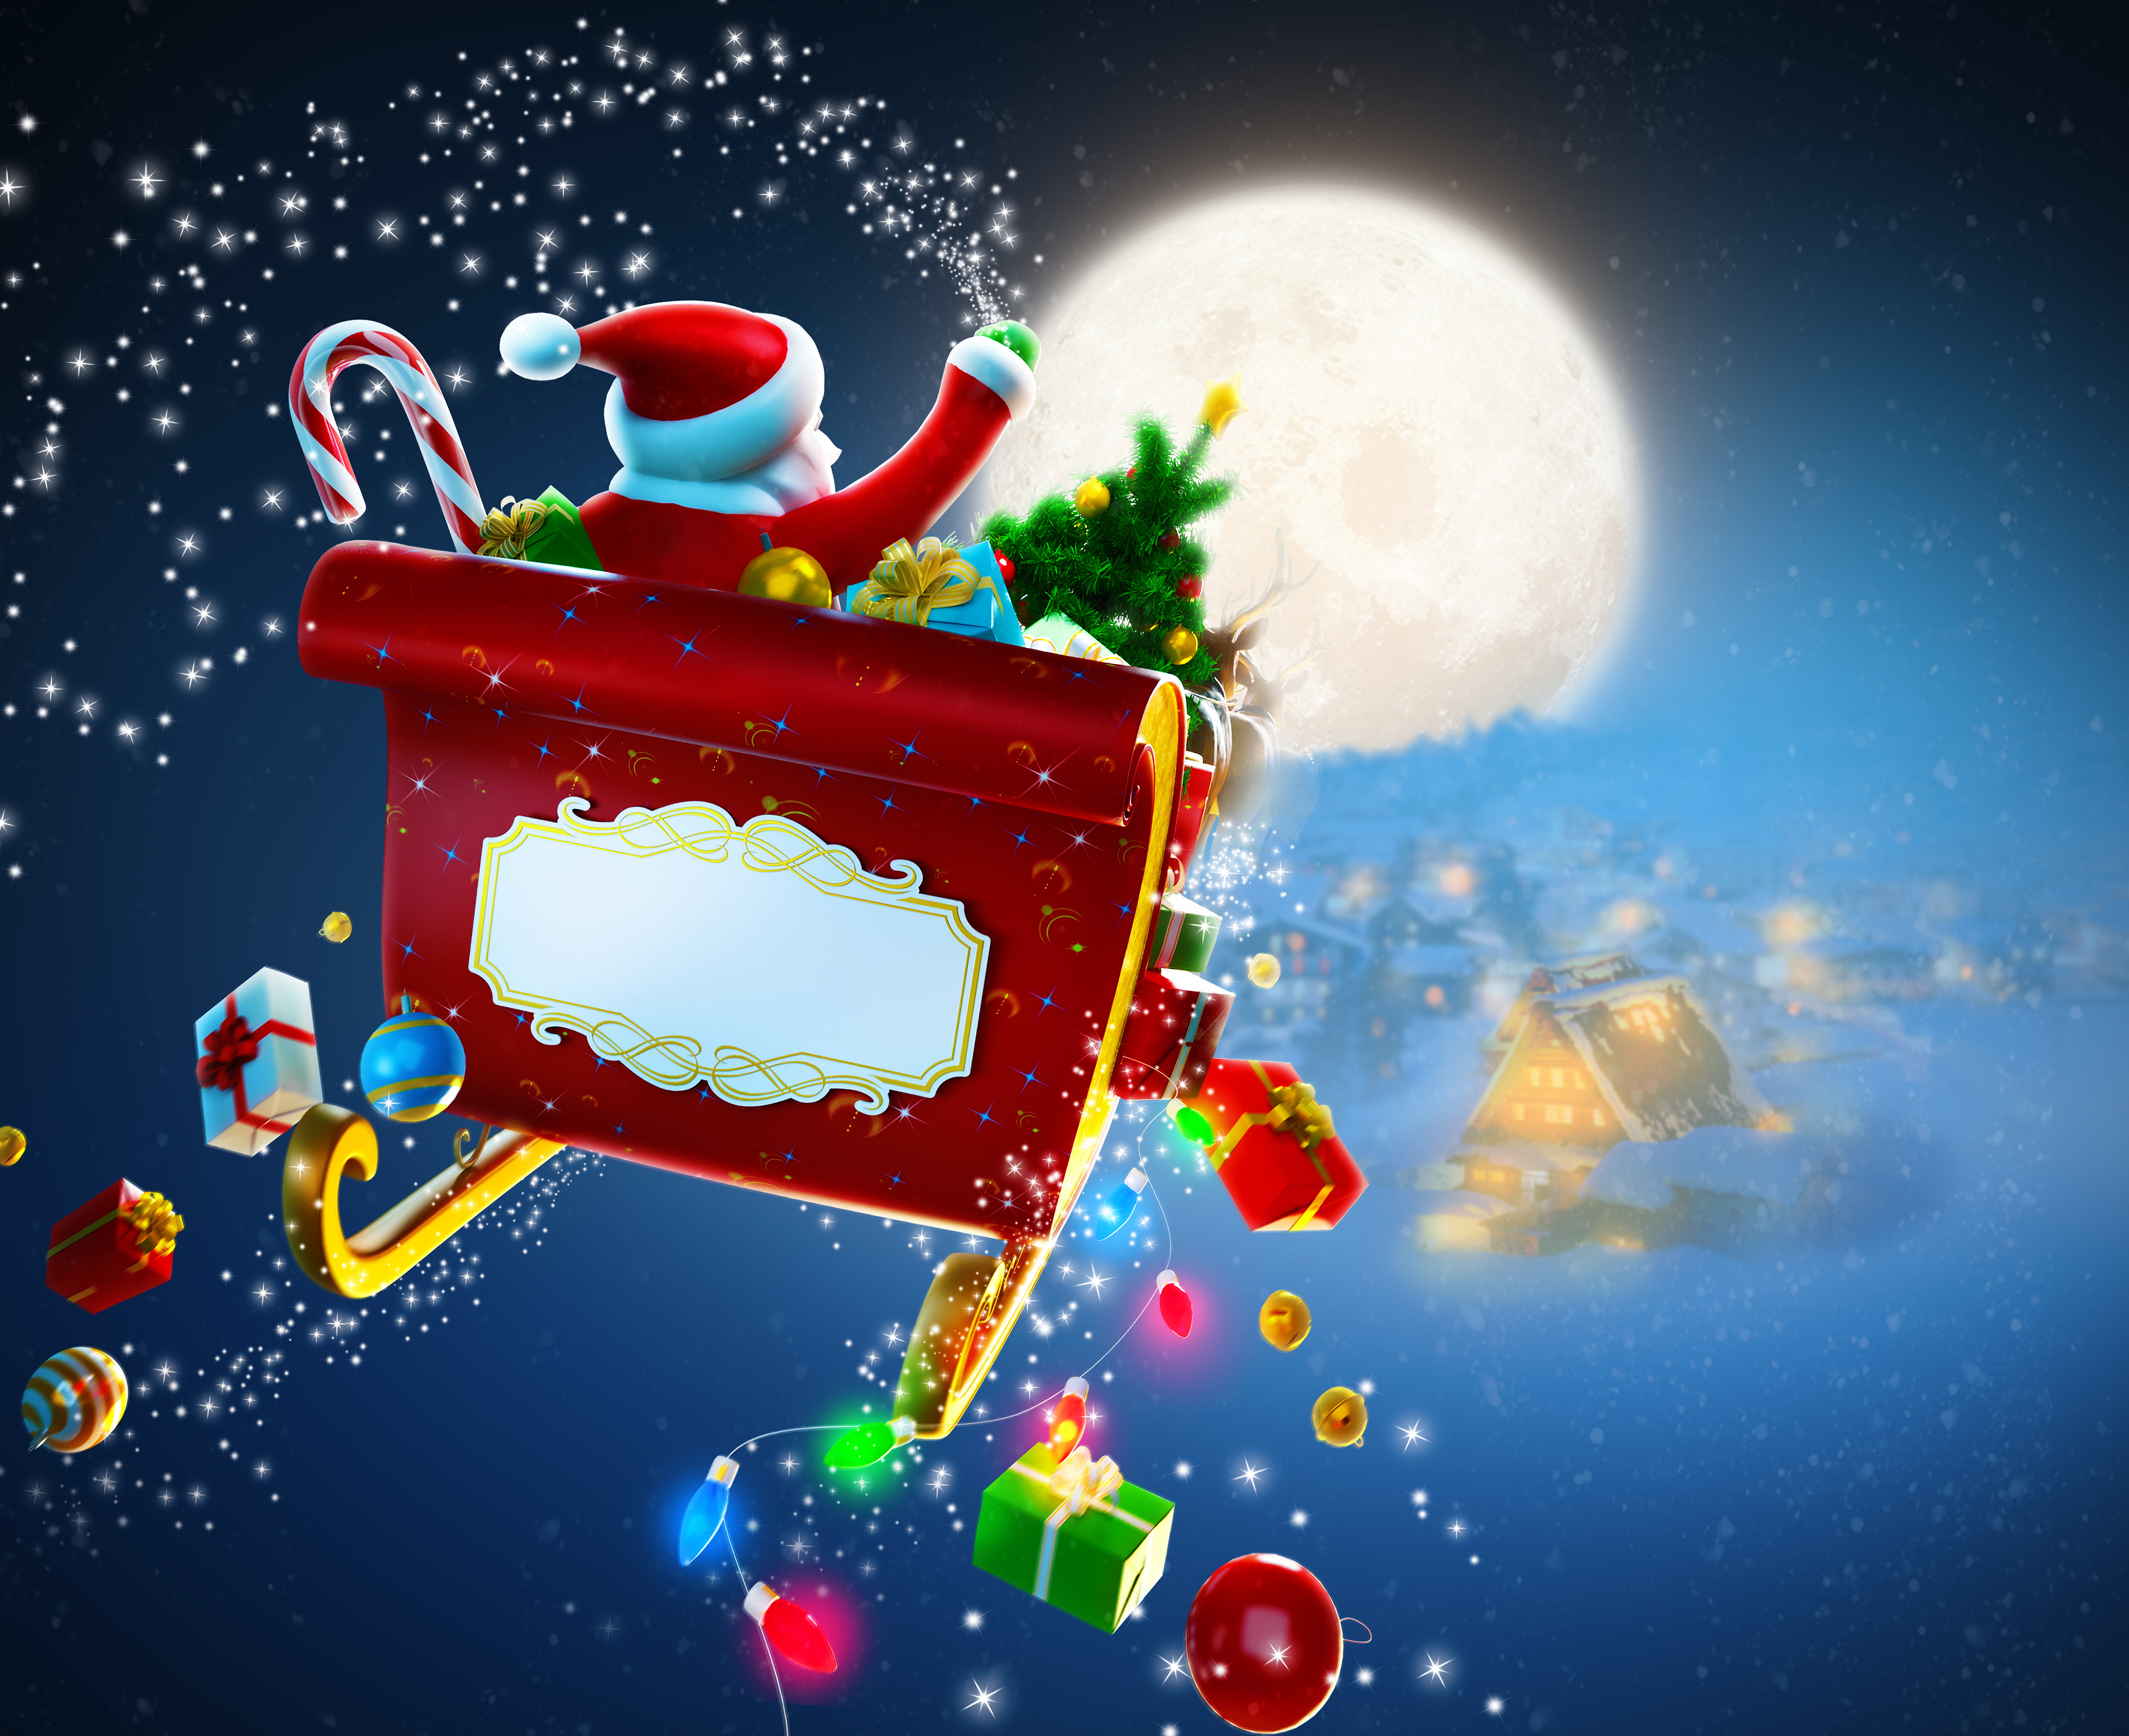 Santa Claus near sleight digital wallpaper, snow, the city, toys